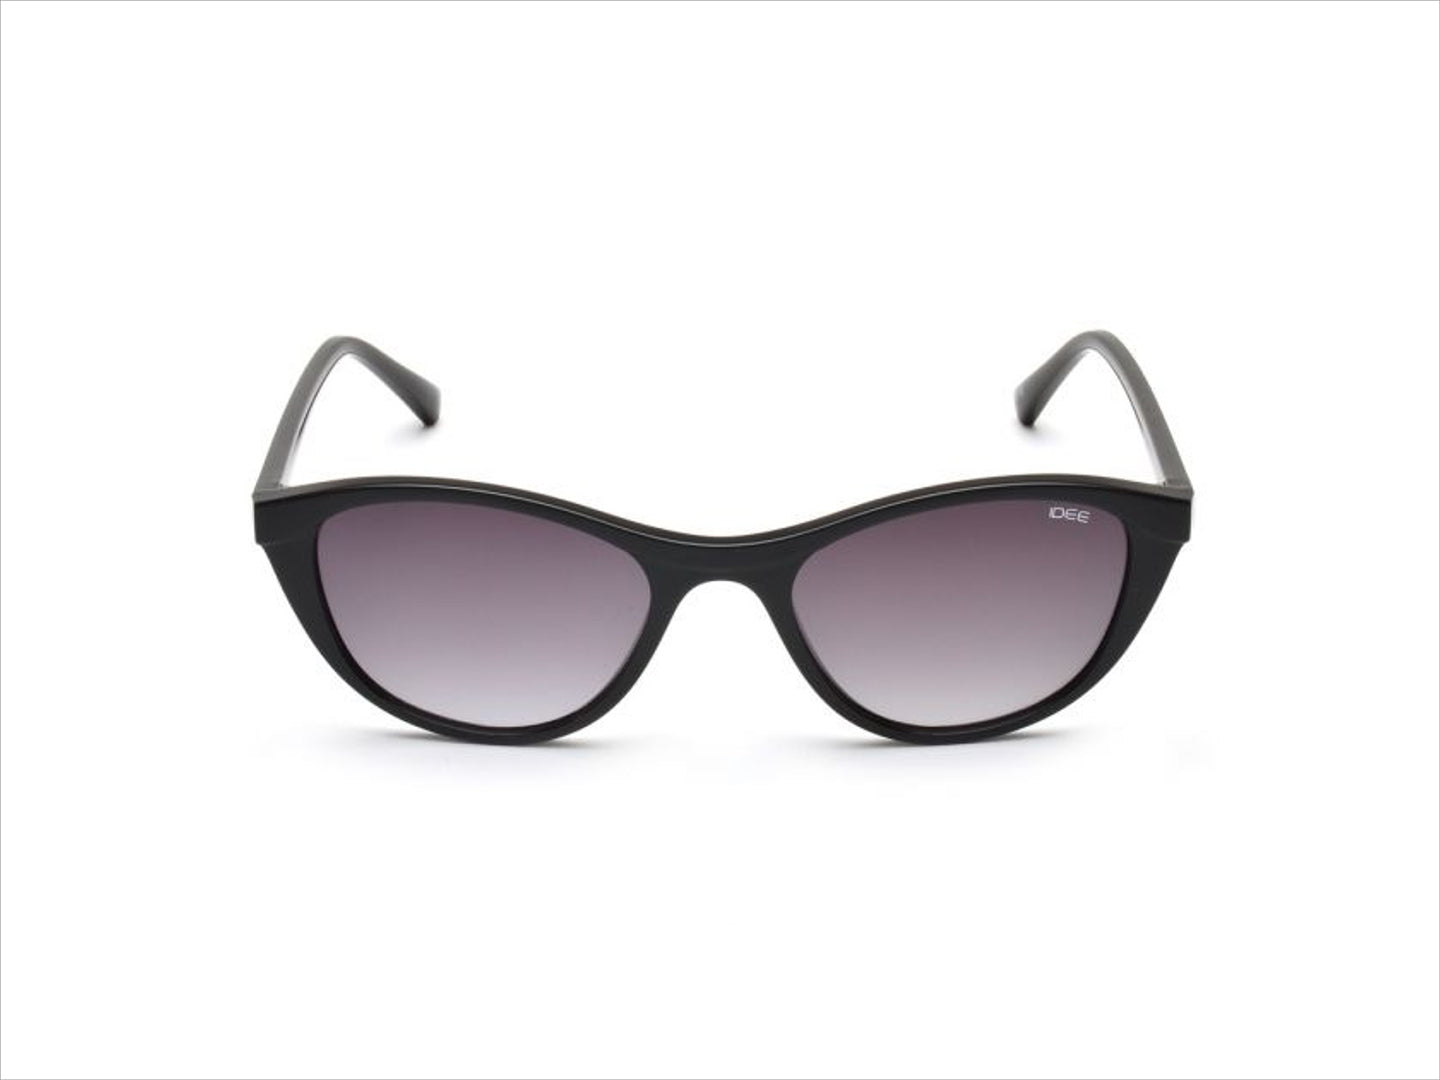 IDEE Women's Cat Eye Black Sunglass (Grey Gradient Lens)